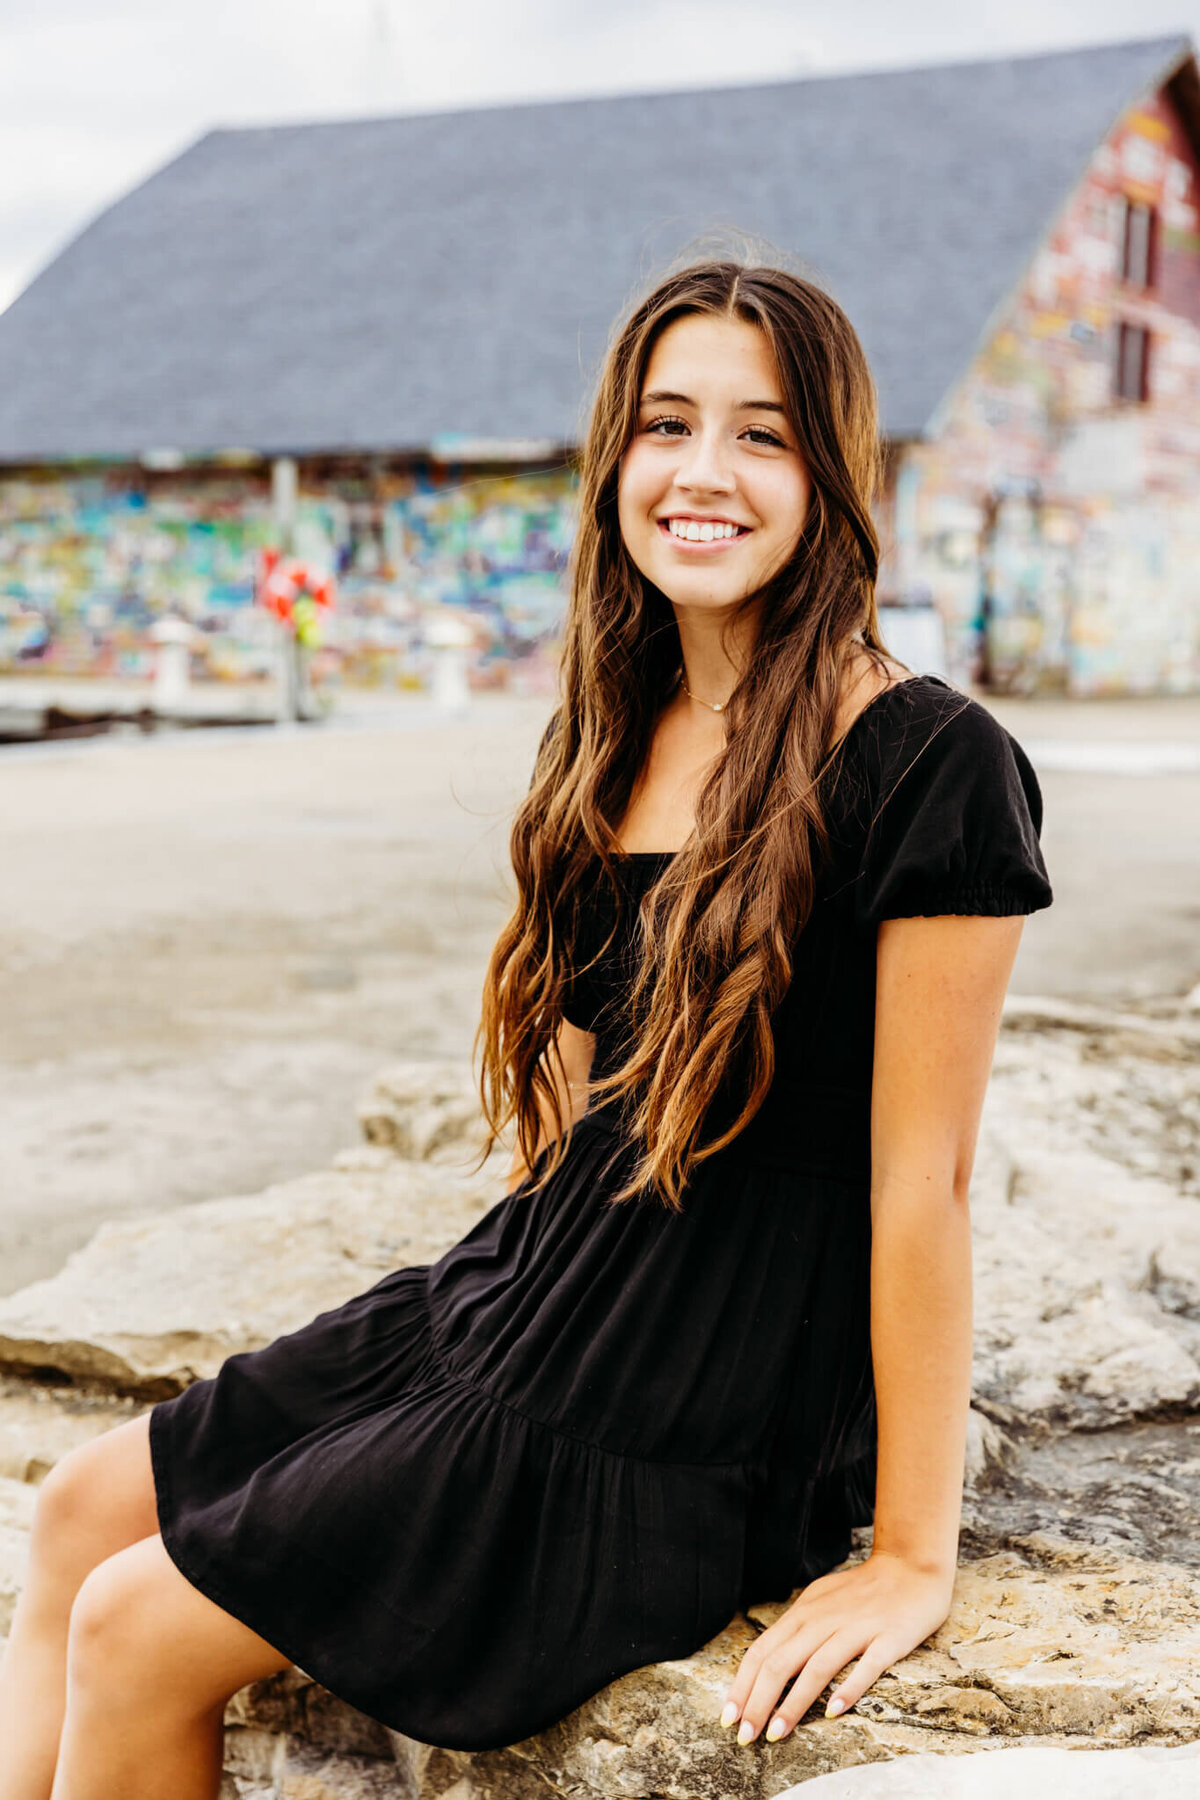 brunette teenage girl in a black dress sitting on a large rock near Oshkosh